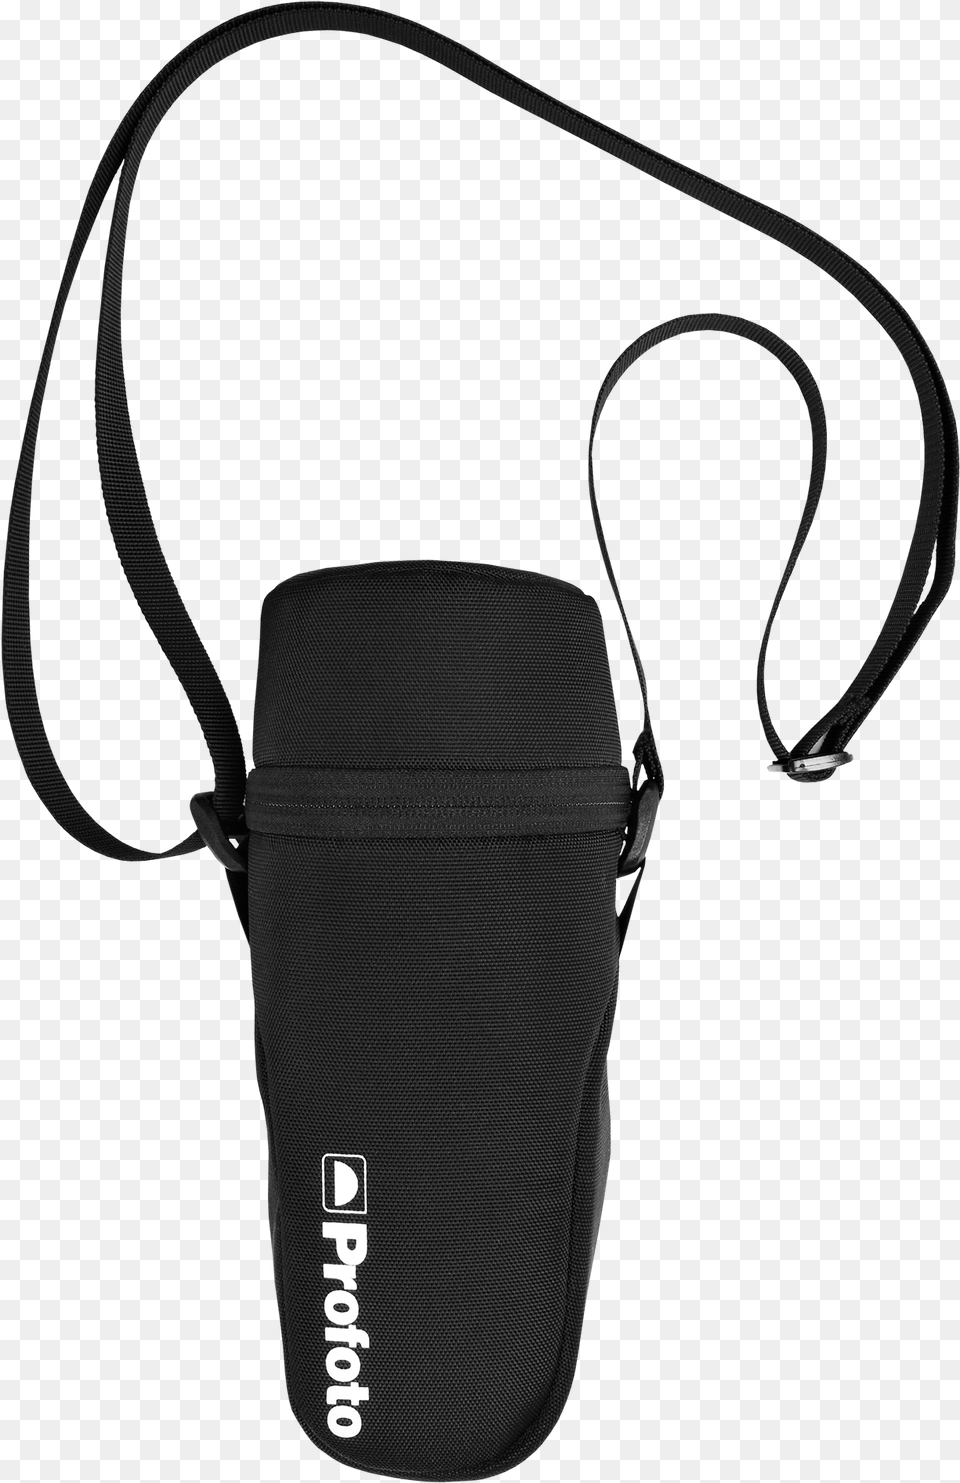 Profoto A1 Flash Bagtitle Profoto A1 Flash Bag Profoto, Accessories, Strap, Electronics, Headphones Png Image